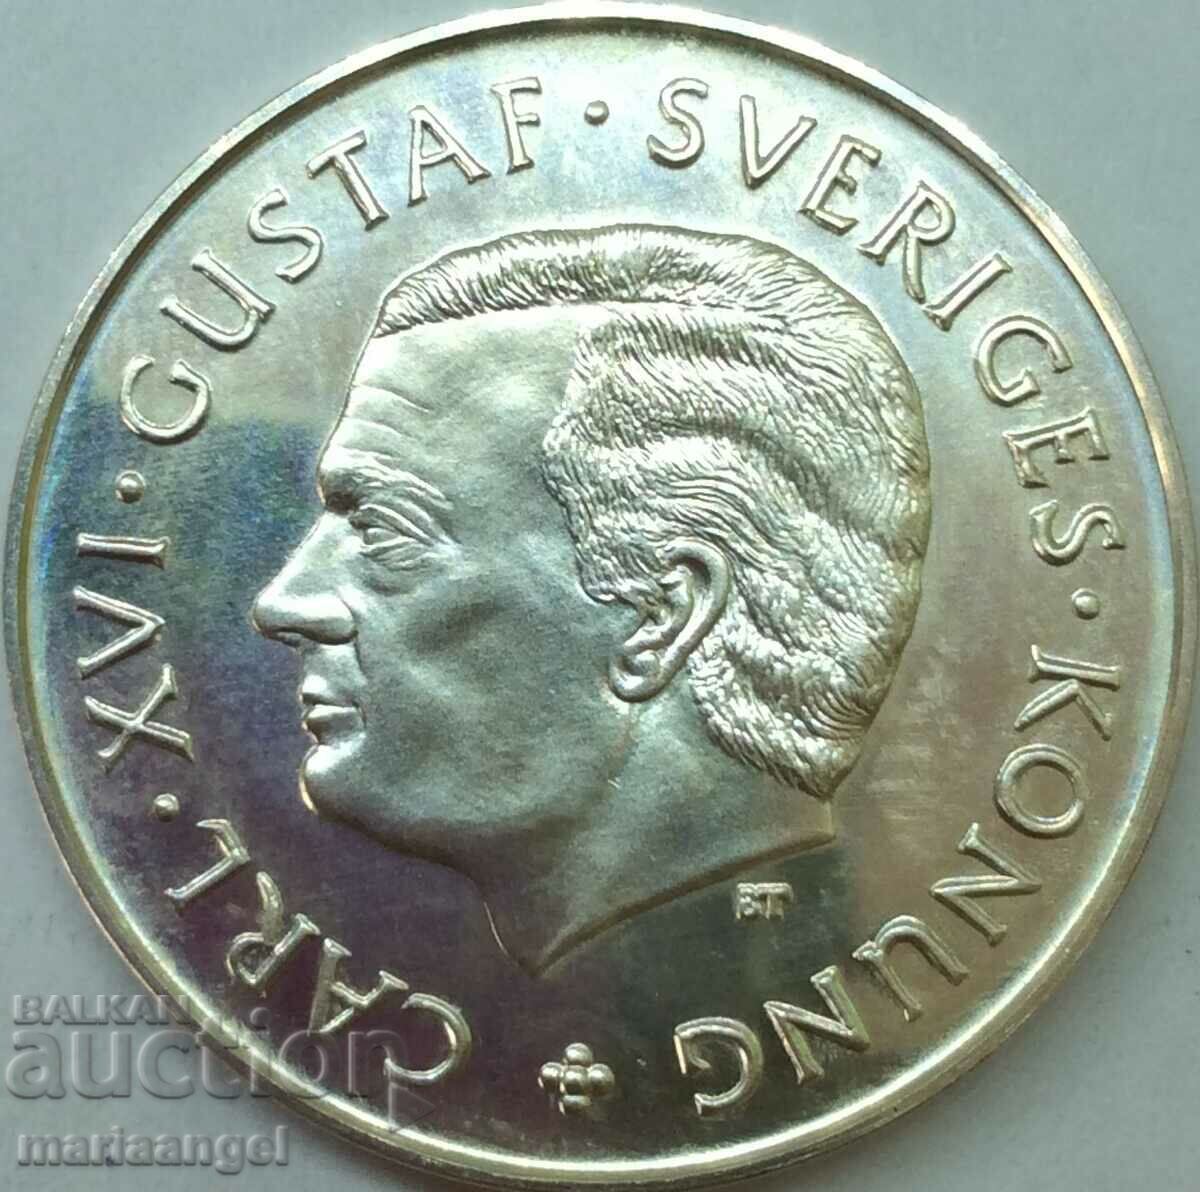 Sweden 100 kroner 1988 Karl XVI Jubilee 16.14g silver